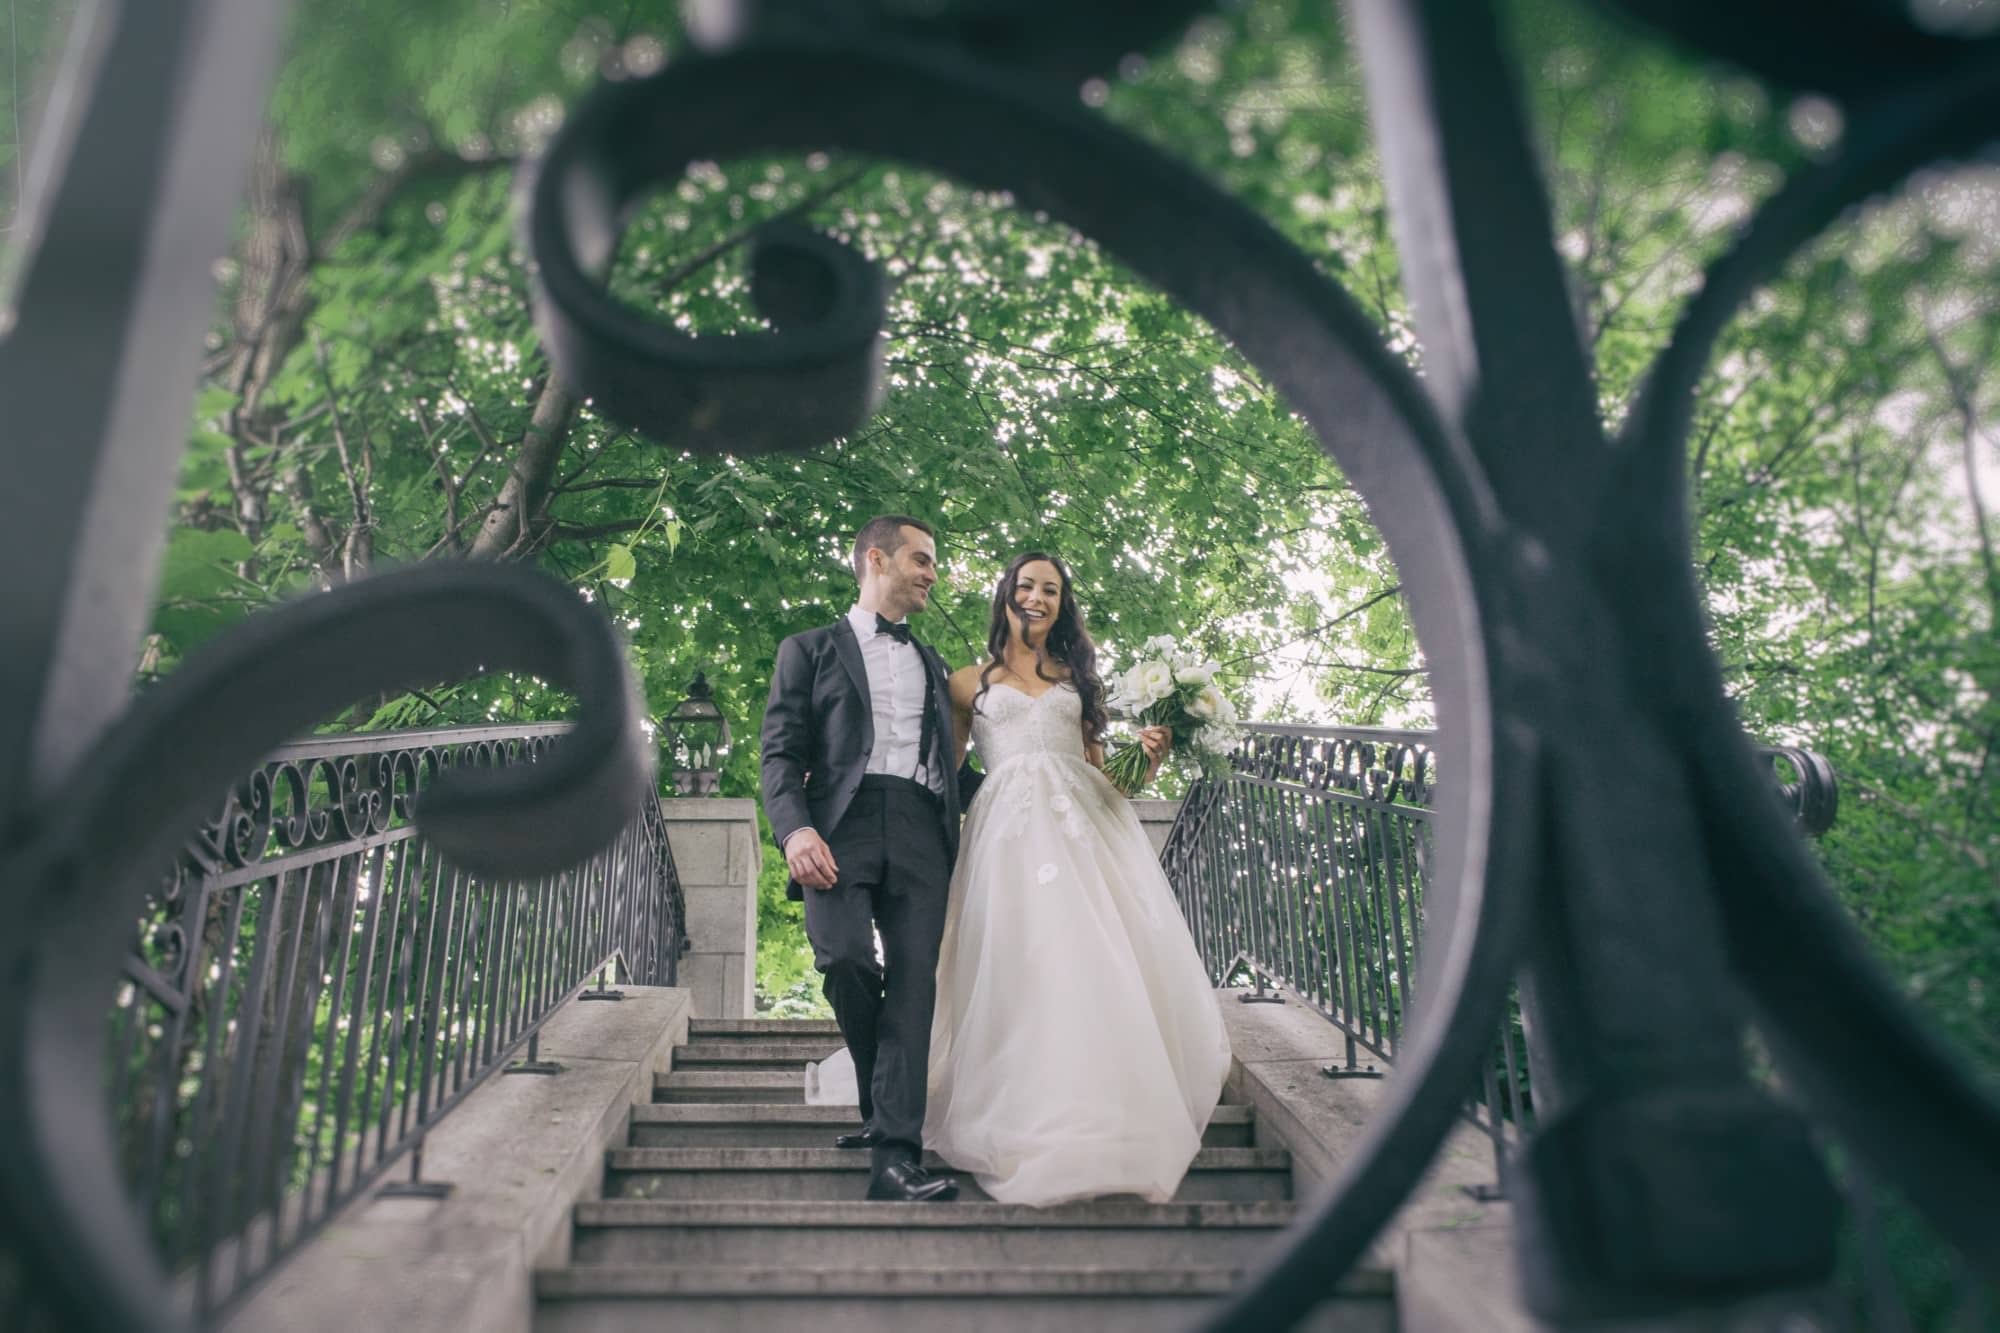 jacklyn laura marcovitz jarred garfinkle staircase montreal jewish wedding shaar hashomayim beautiful bride dress westmount